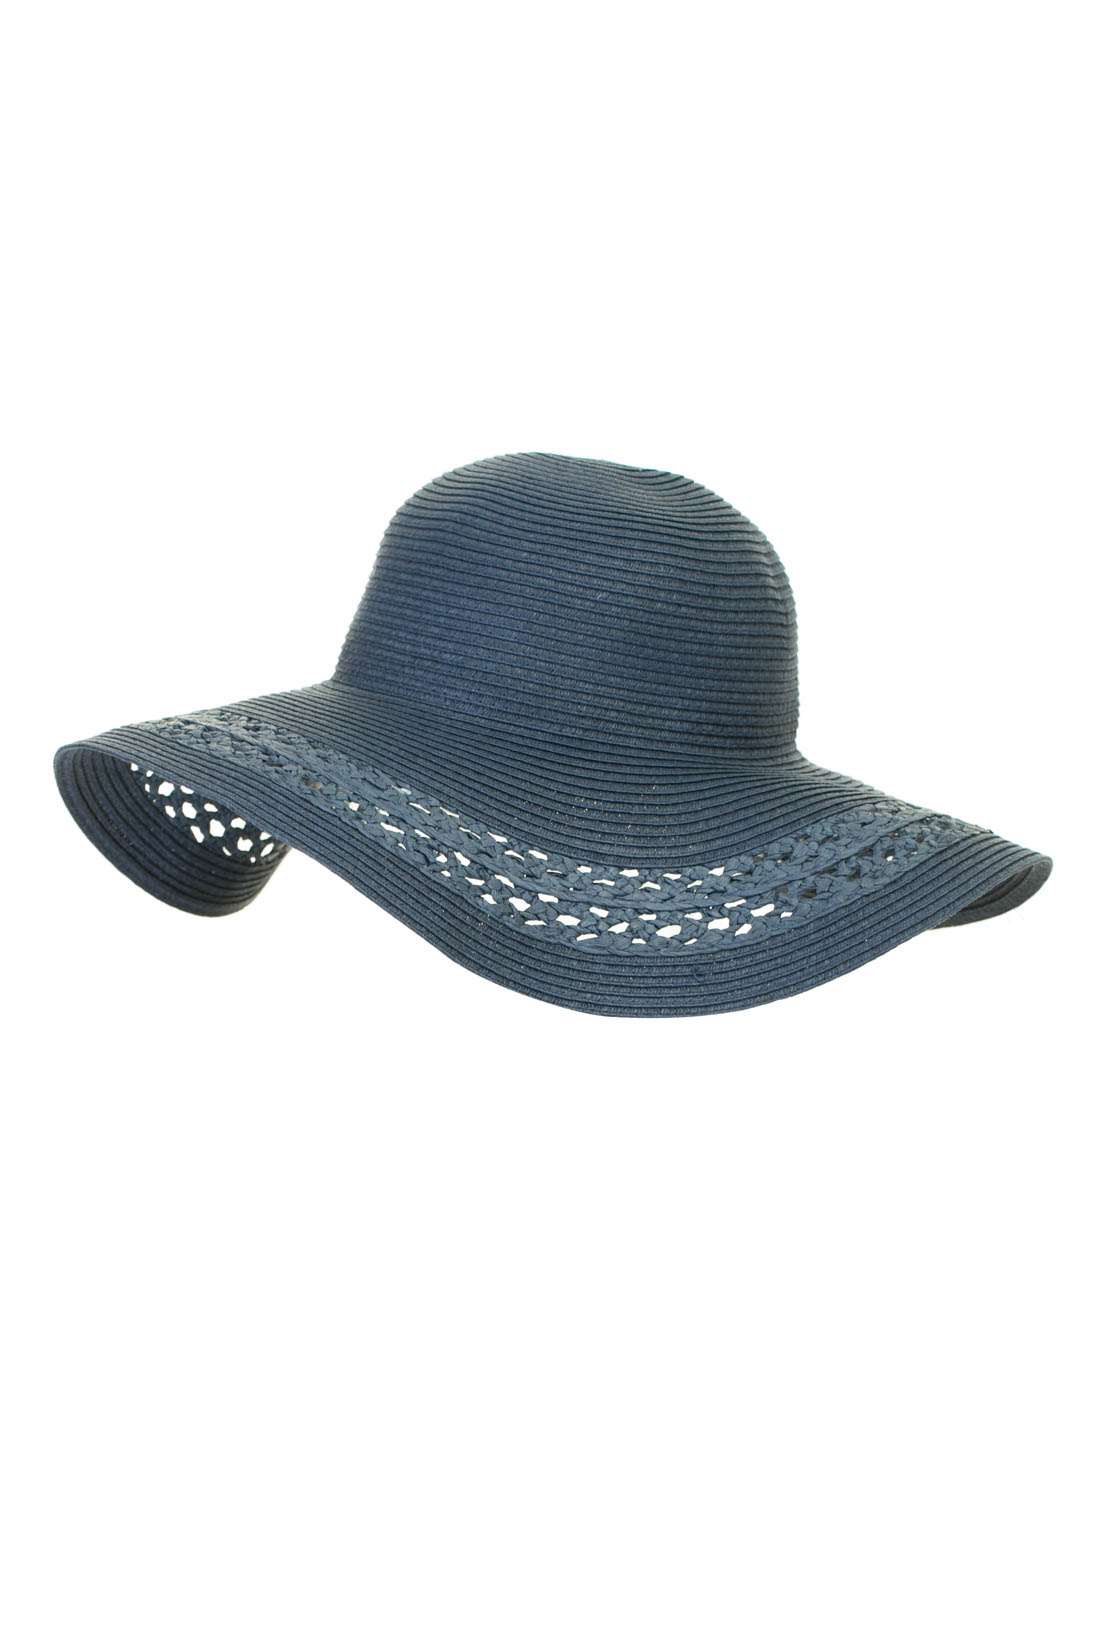 Широкополая шляпа с узором (арт. baon B347003), размер 54-56, цвет синий